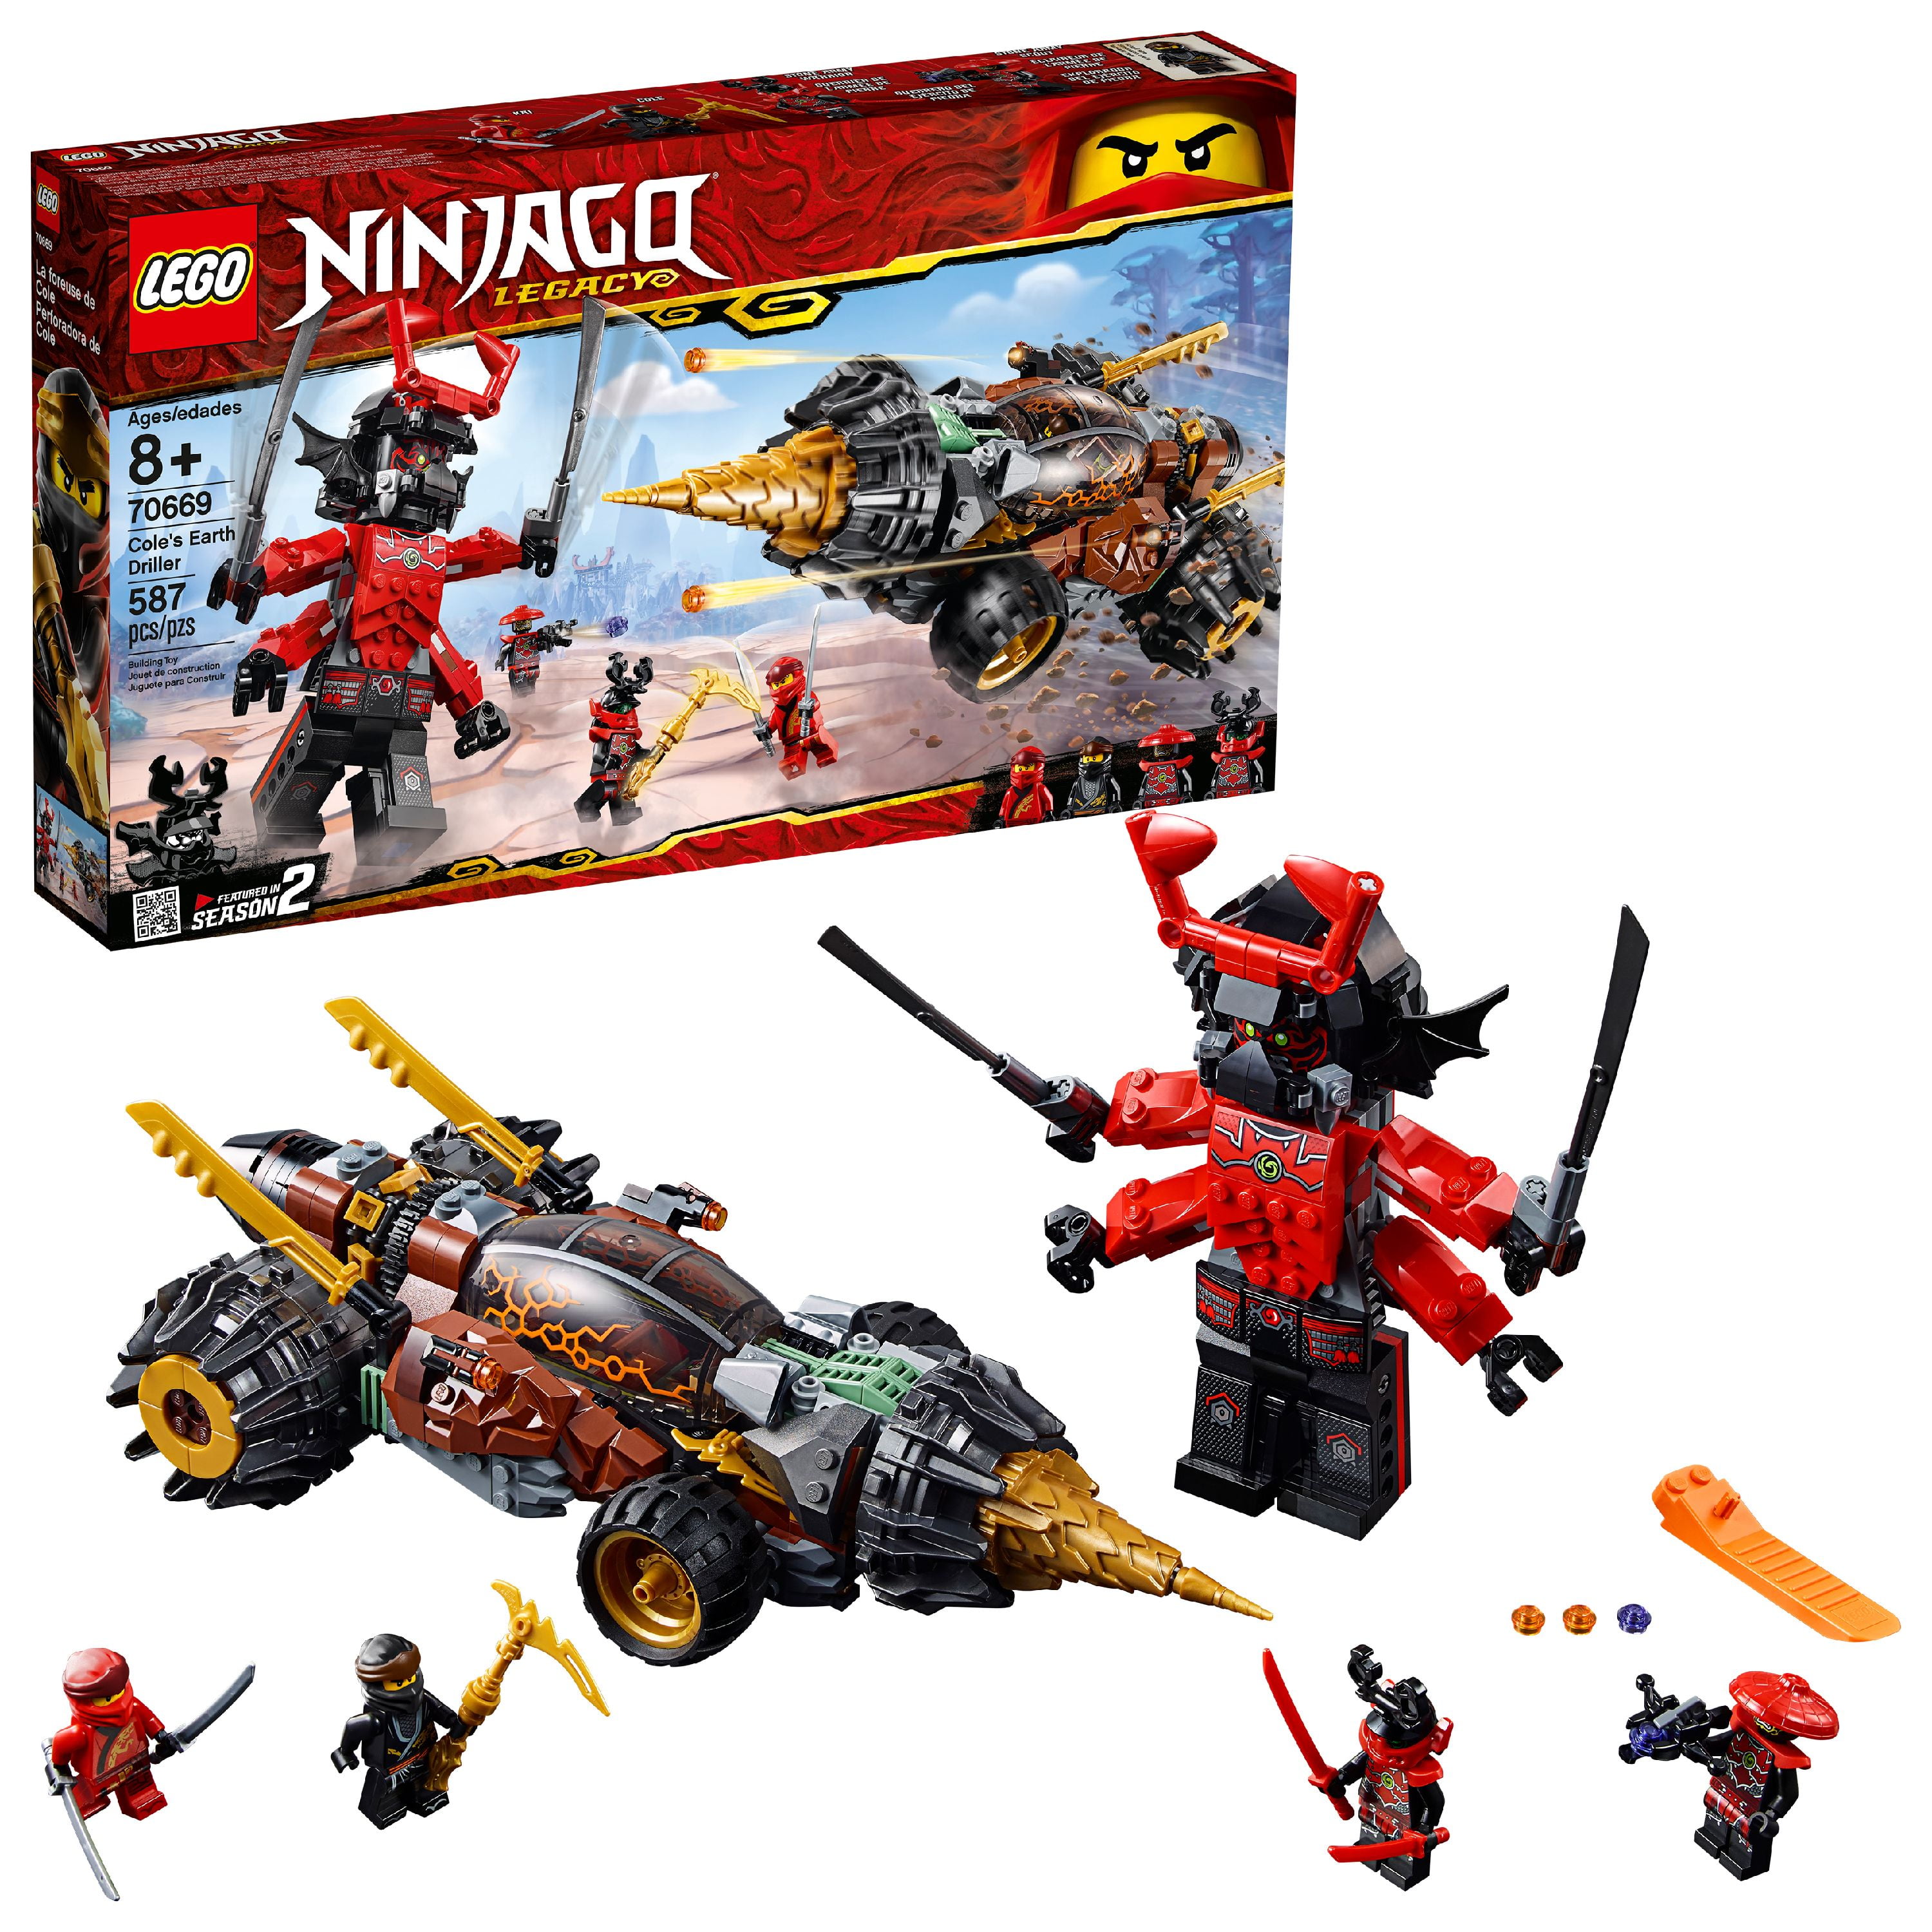 LEGO Ninjago Cole's Earth Driller Ninja Toy Set 70669 - Walmart.com